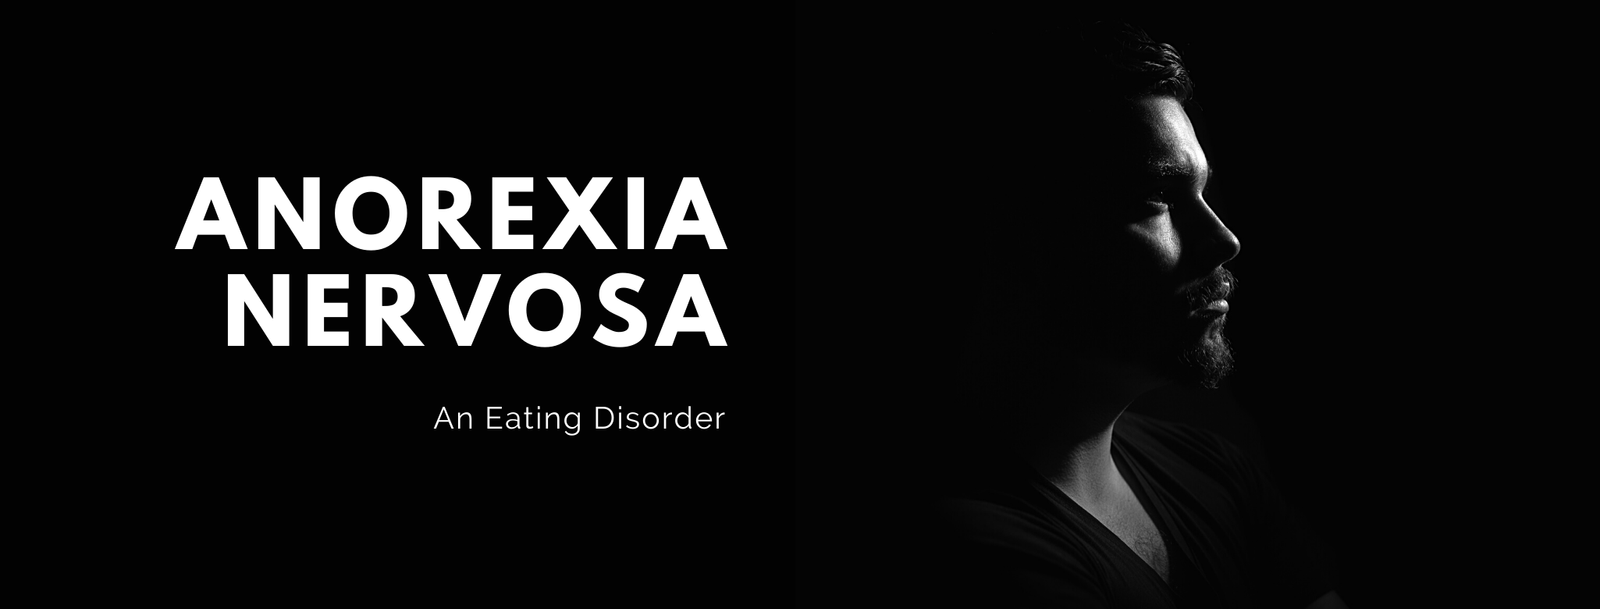 anorexia nervosa - eating disorder - mht india